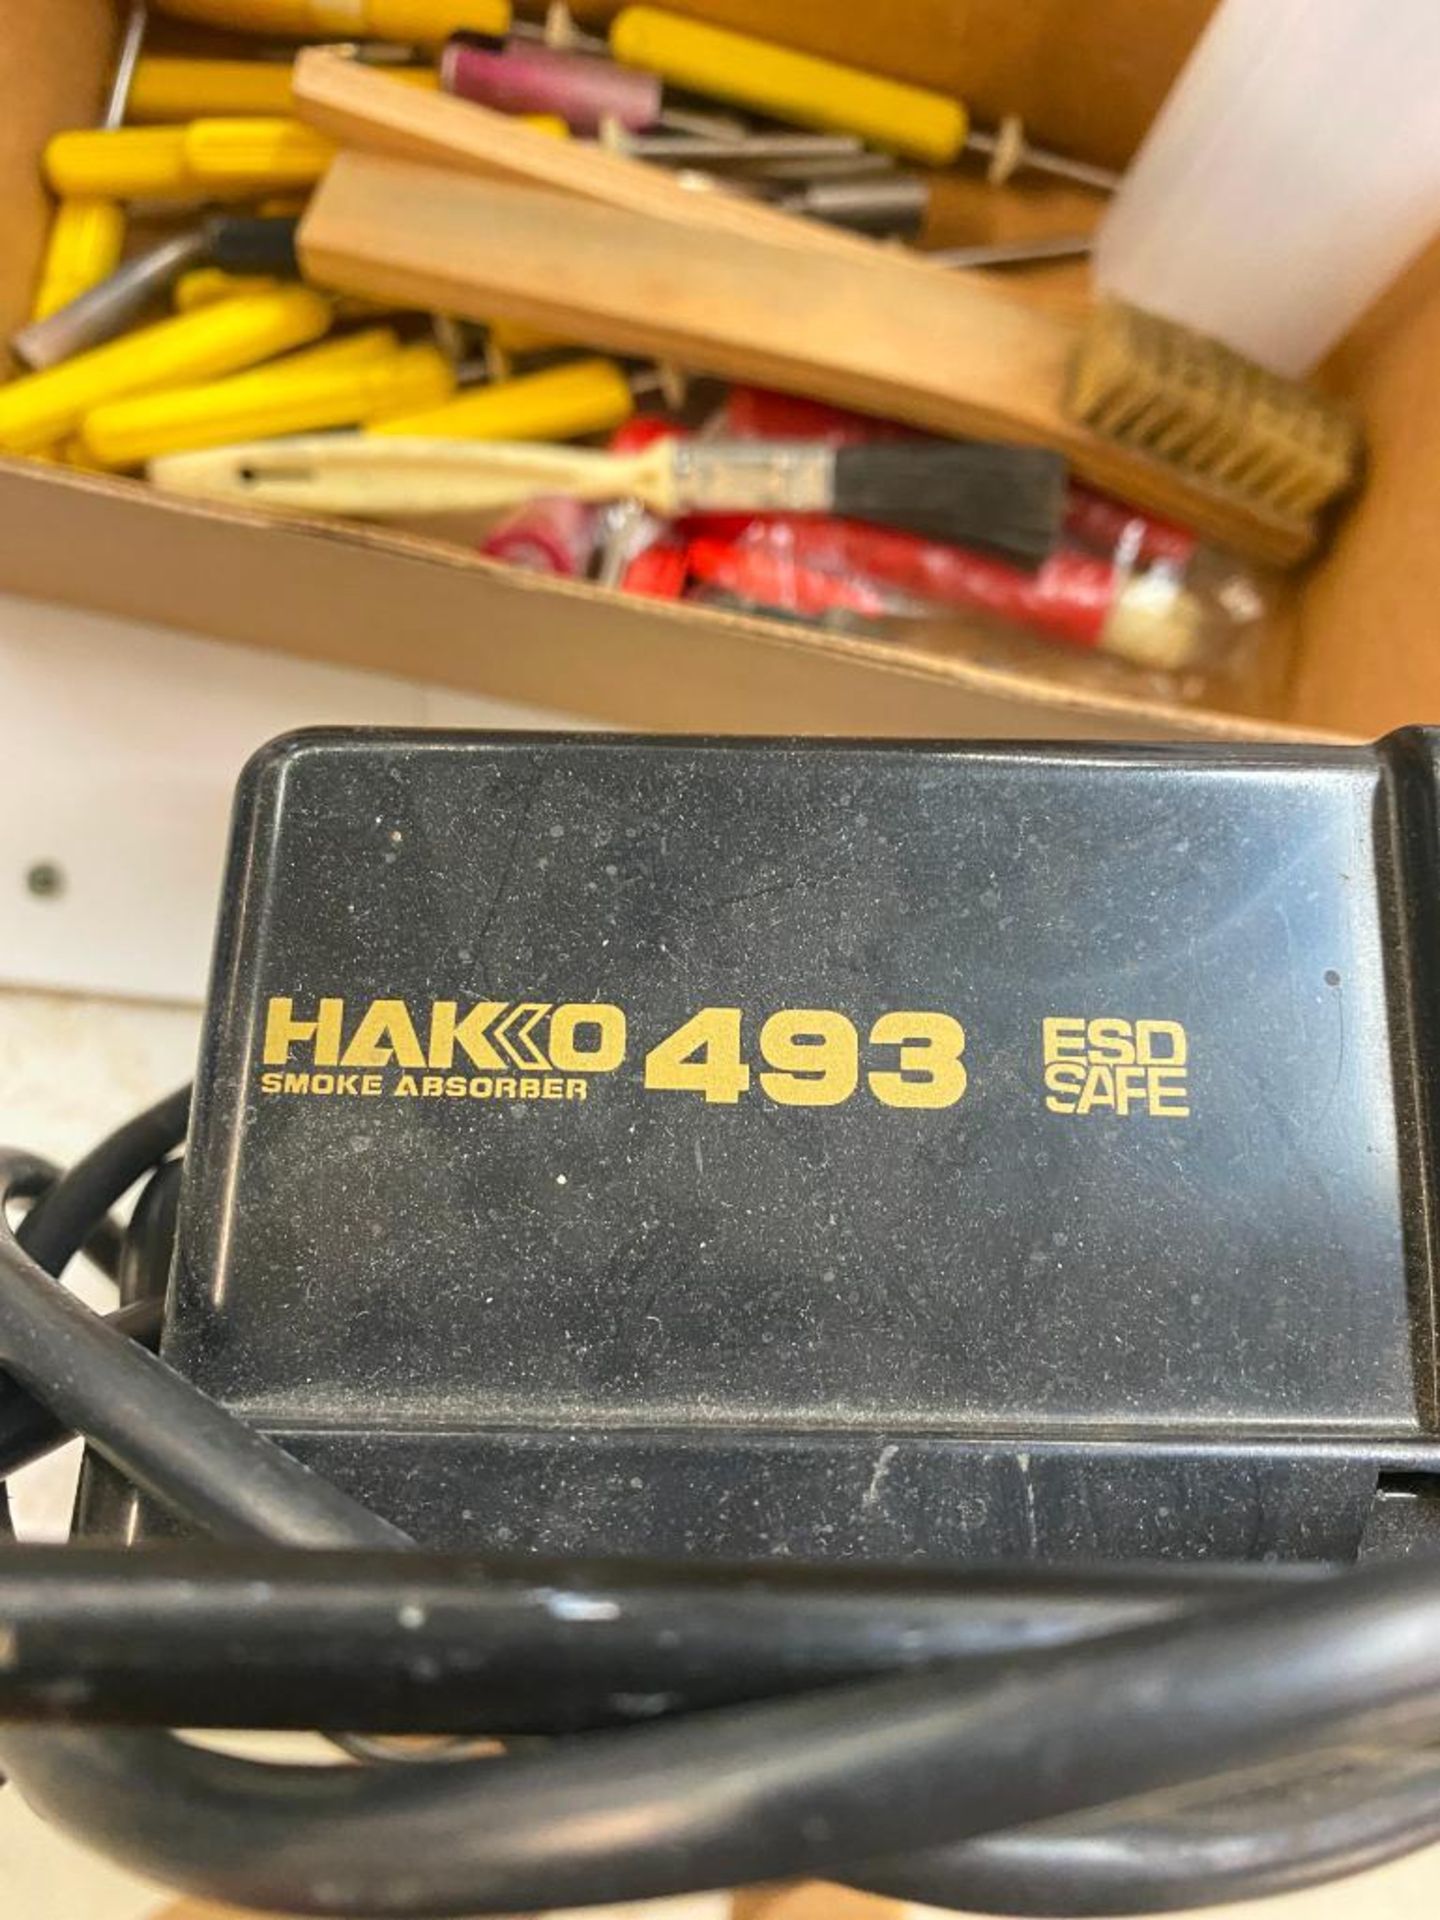 Hakko 493 Smoke Absorber - Image 2 of 2